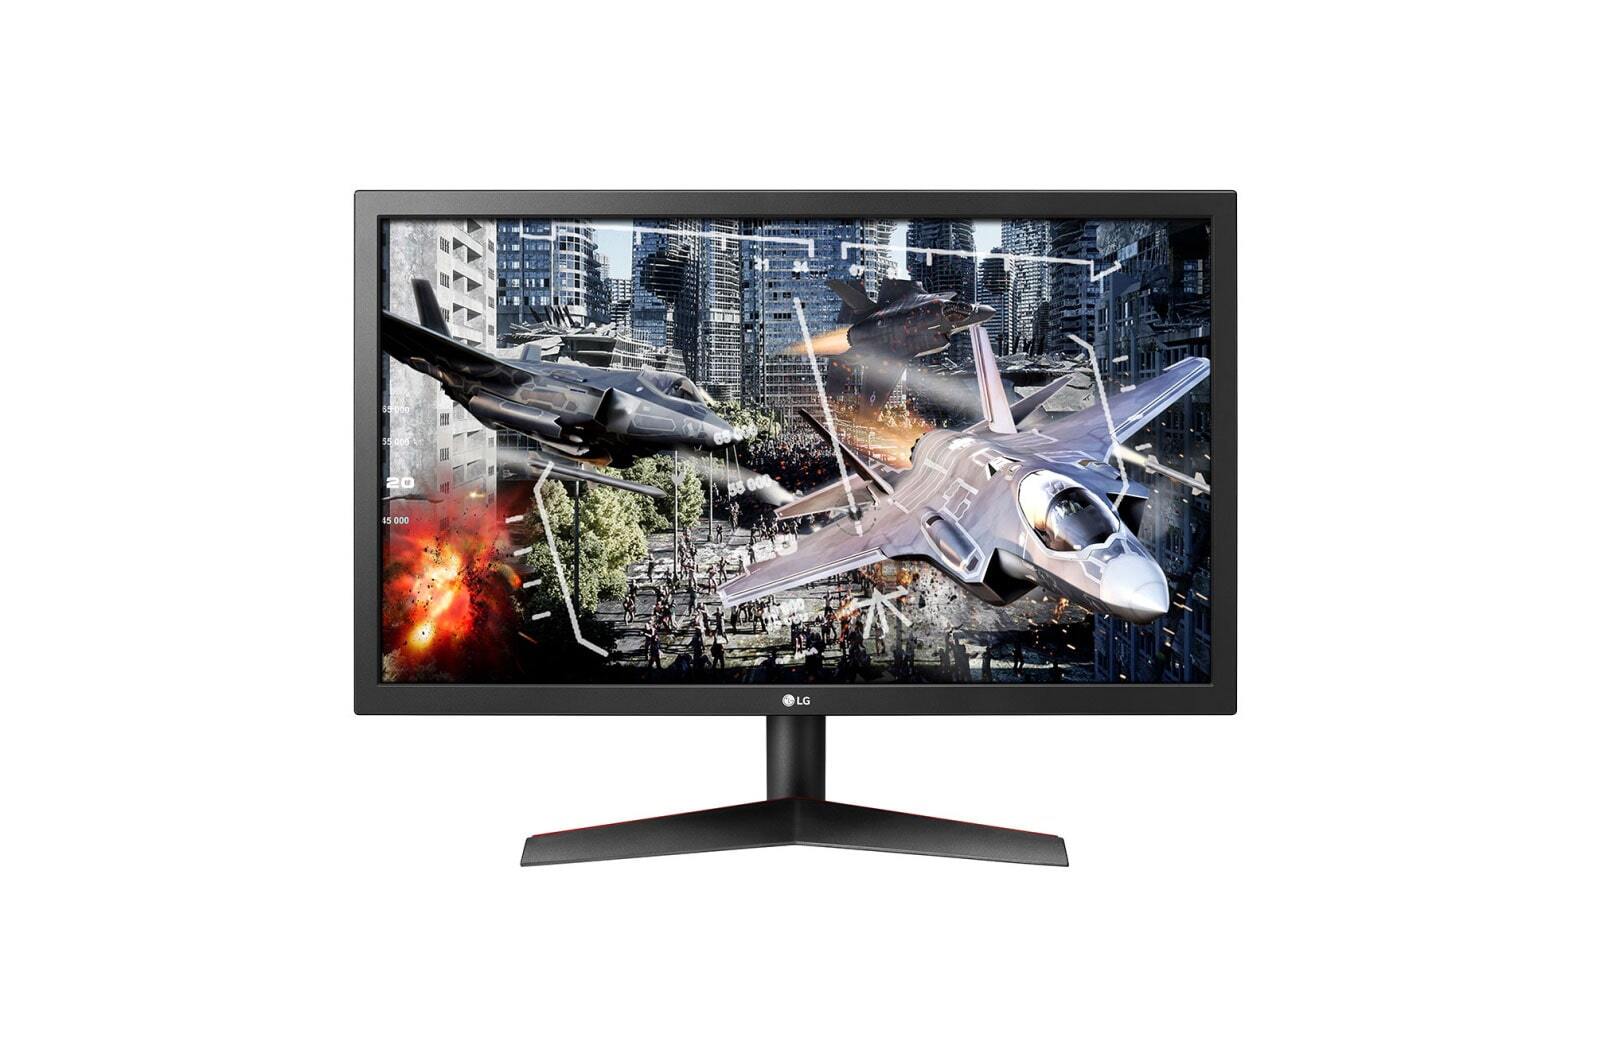 CommericalDisplayWorks.co.uk LG 24GL65B-B 24 inch UltraGear® Full HD Gaming Monitor with Radeon FreeSync®